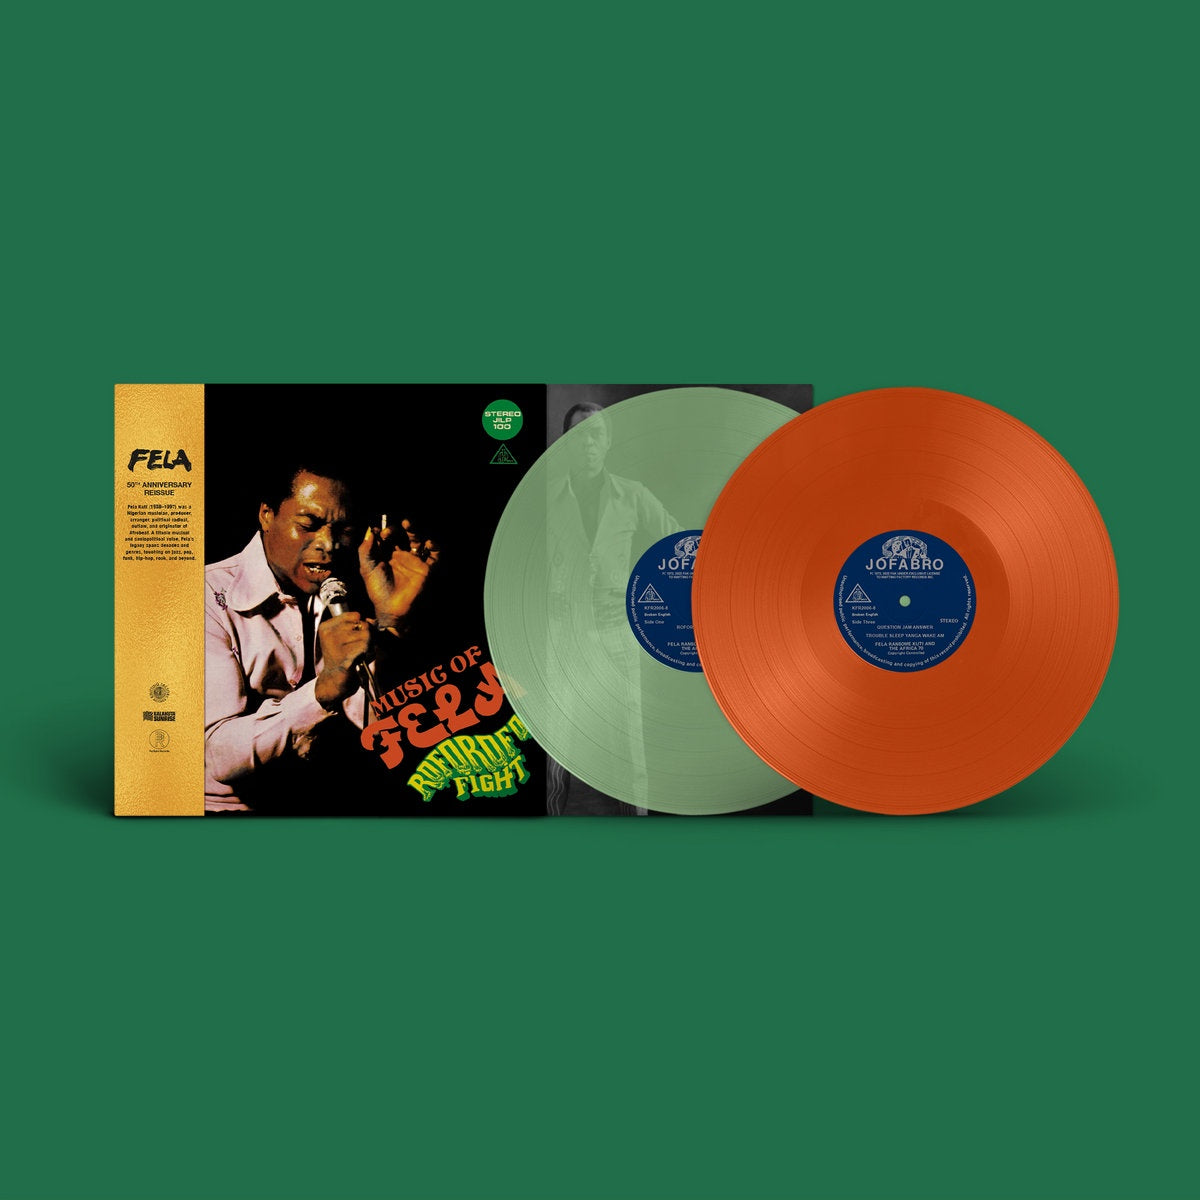 Fela Kuti - Roforofo Fight (50th Anniversary) - New 2 LP Record 2022 Knitting Factory Orange & Green Vinyl - Afrobeat / Funk